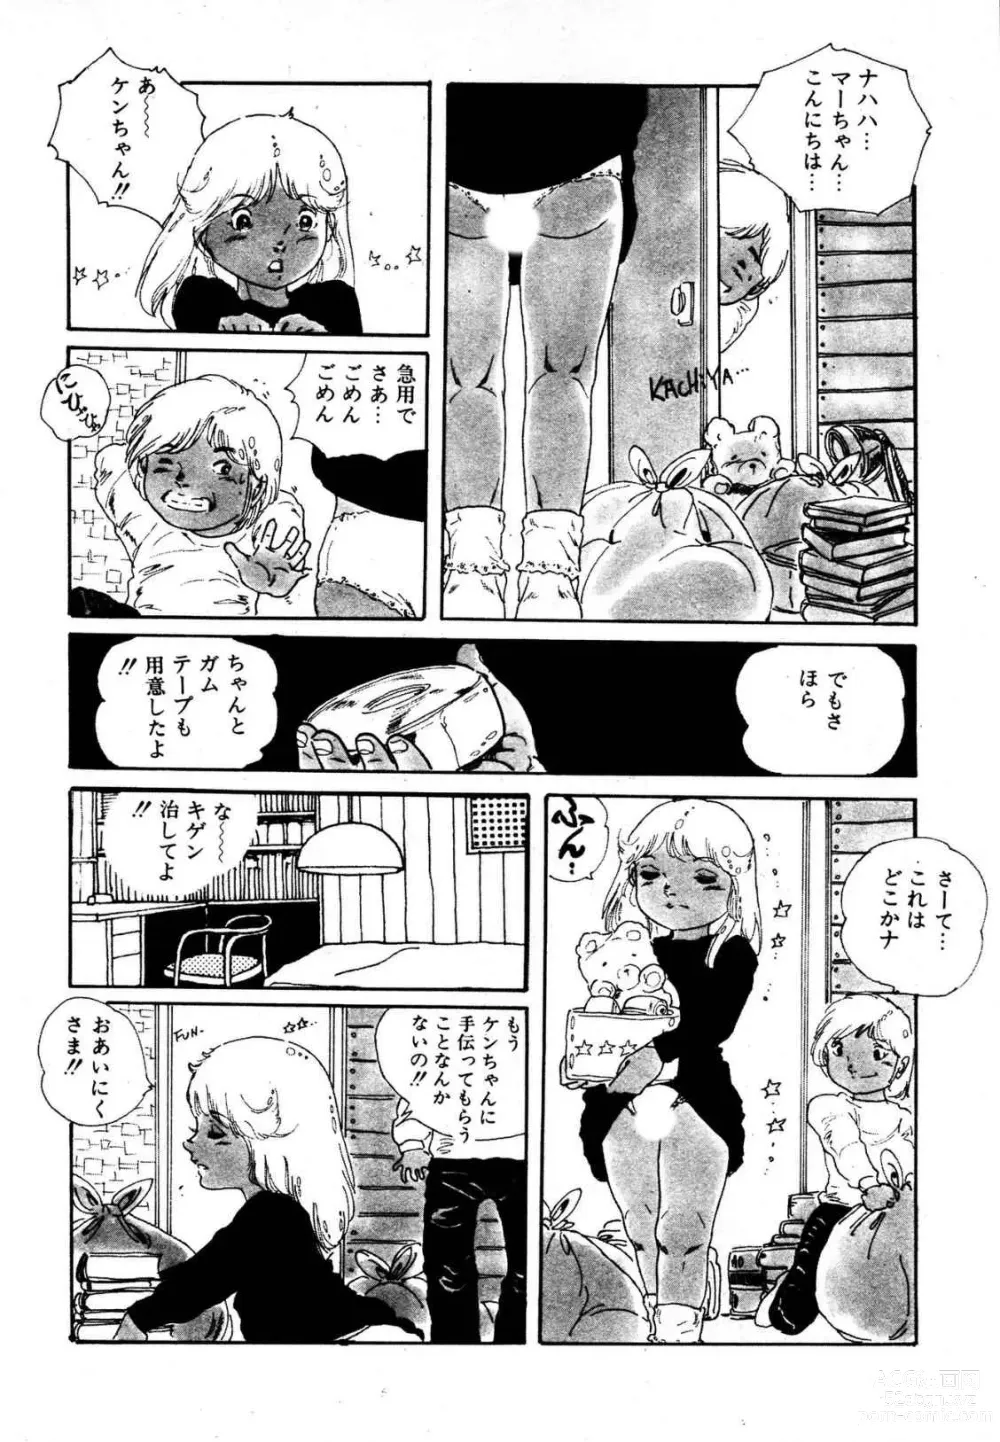 Page 8 of manga Dreaming fairy